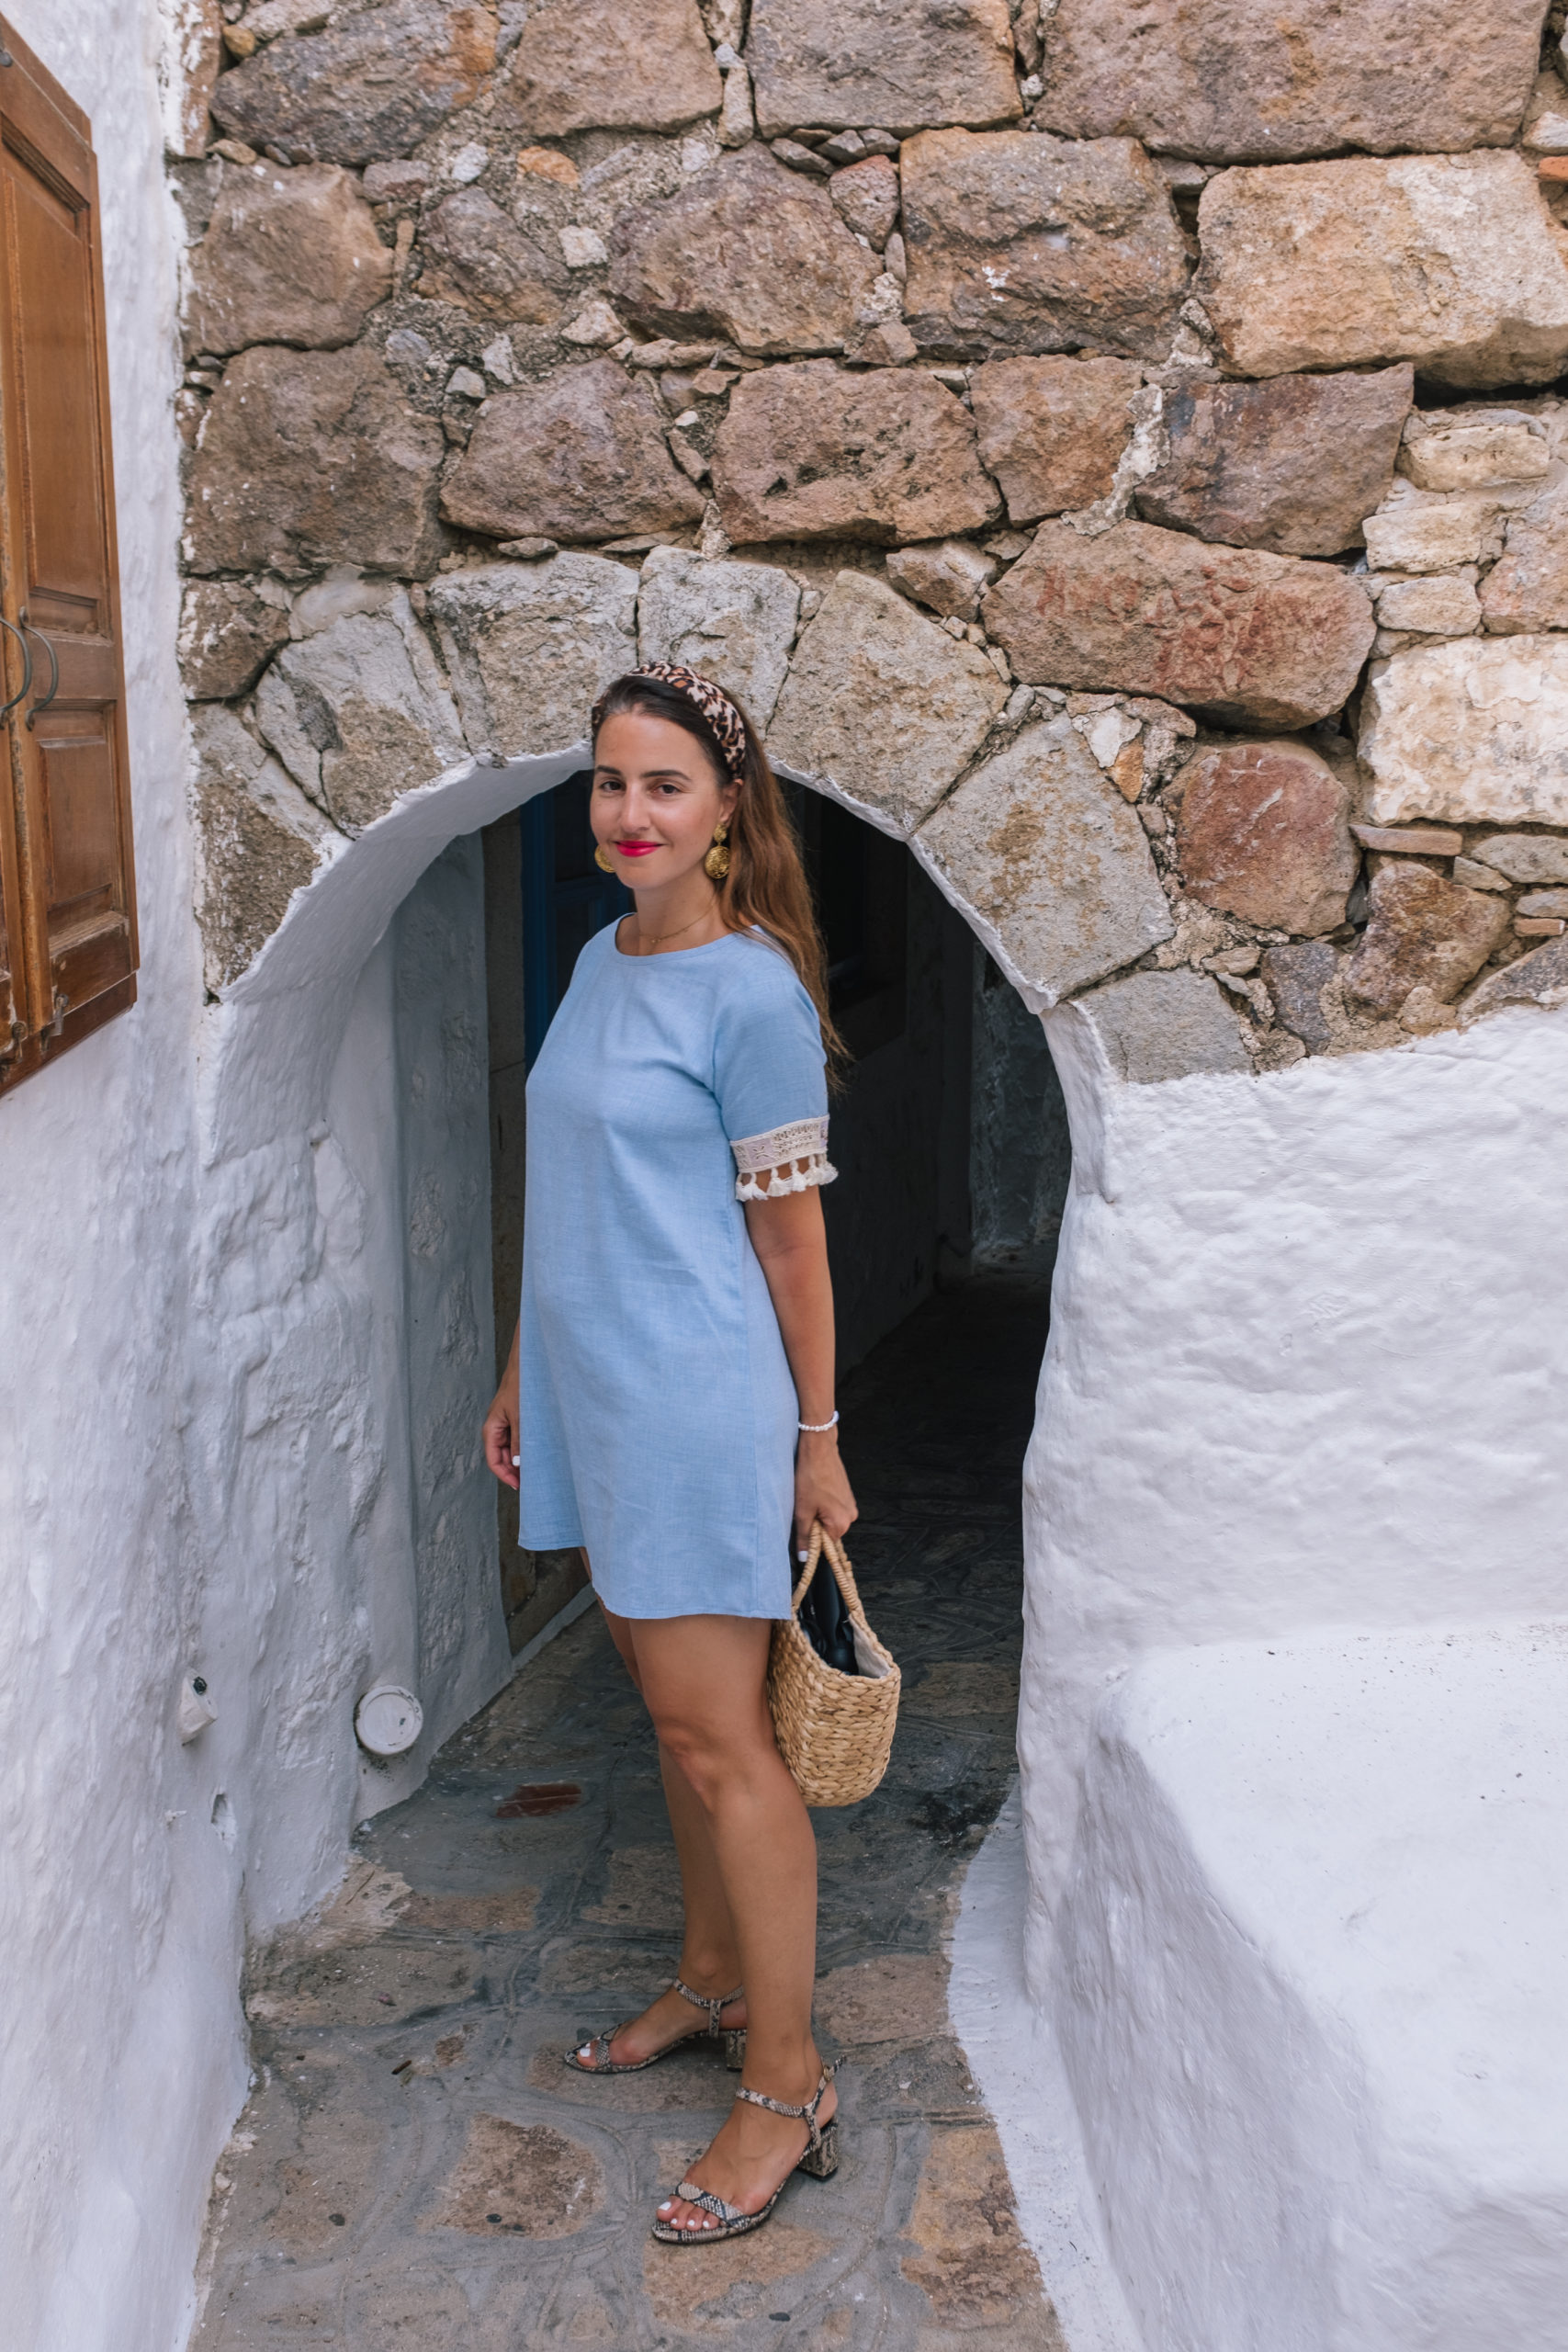 A travel guide to Patmos Greece 